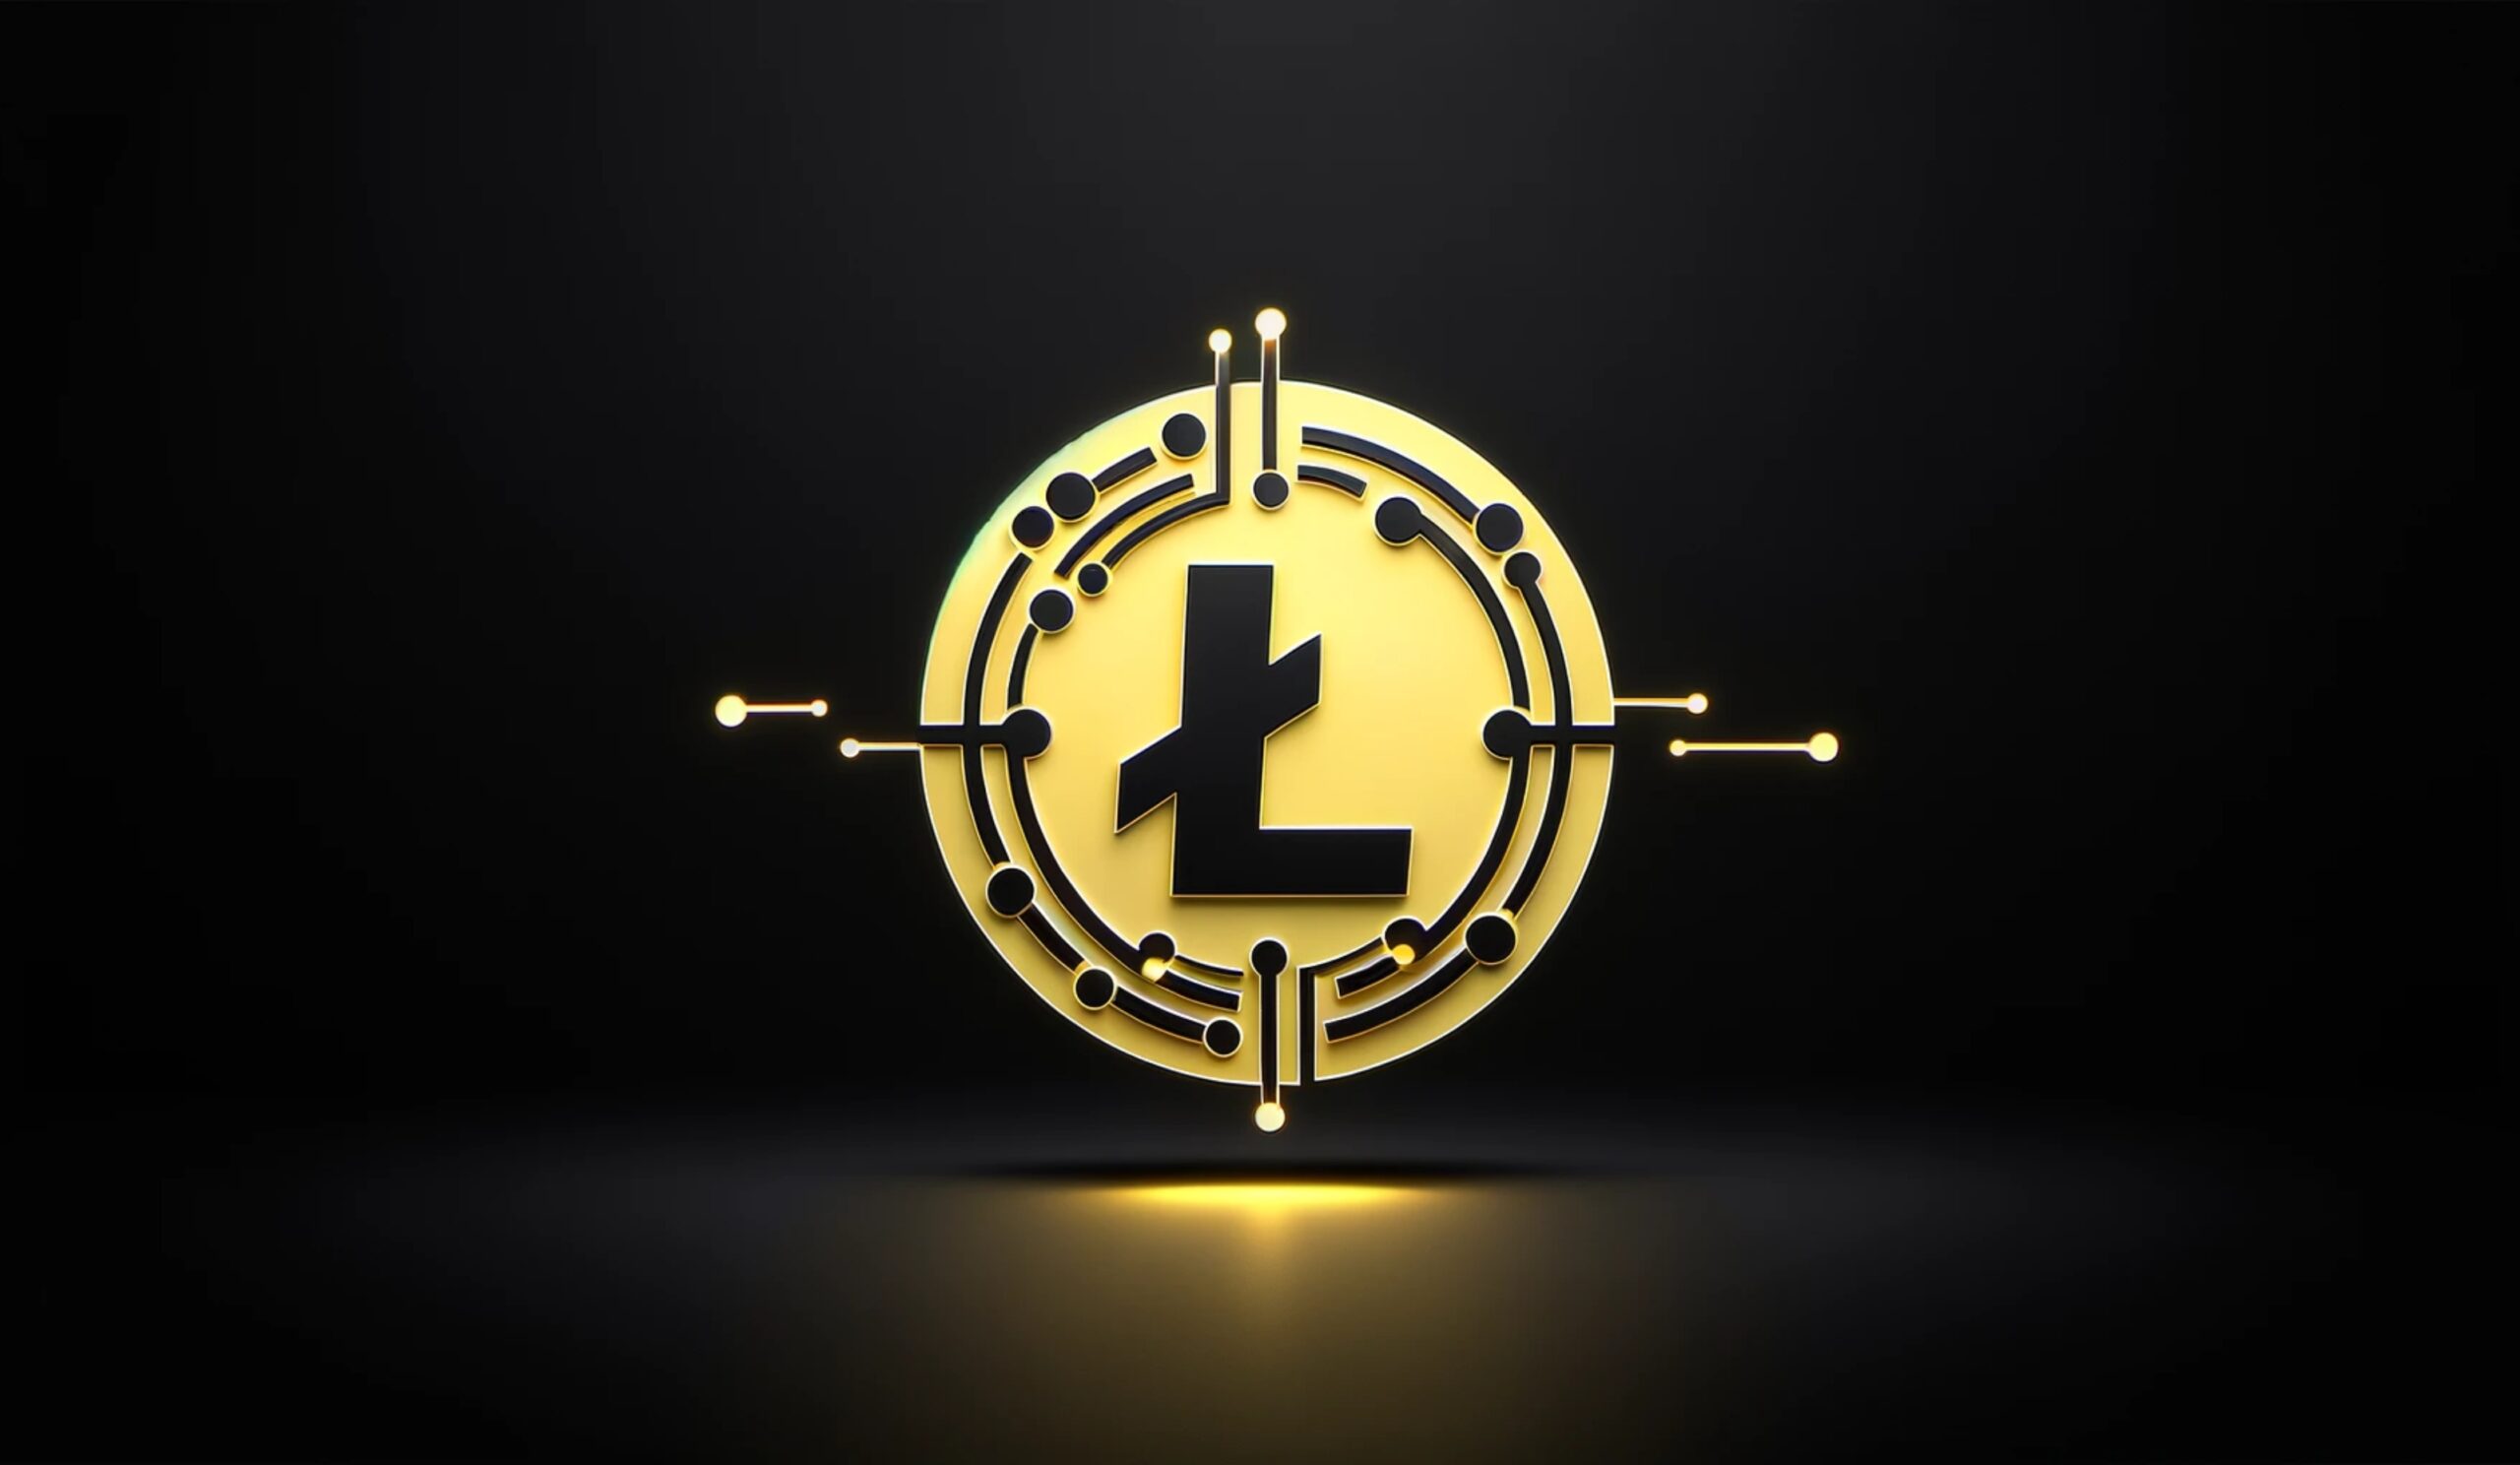 Litecoin (LTC) Analysis The Silver to Bitcoin’s Gold